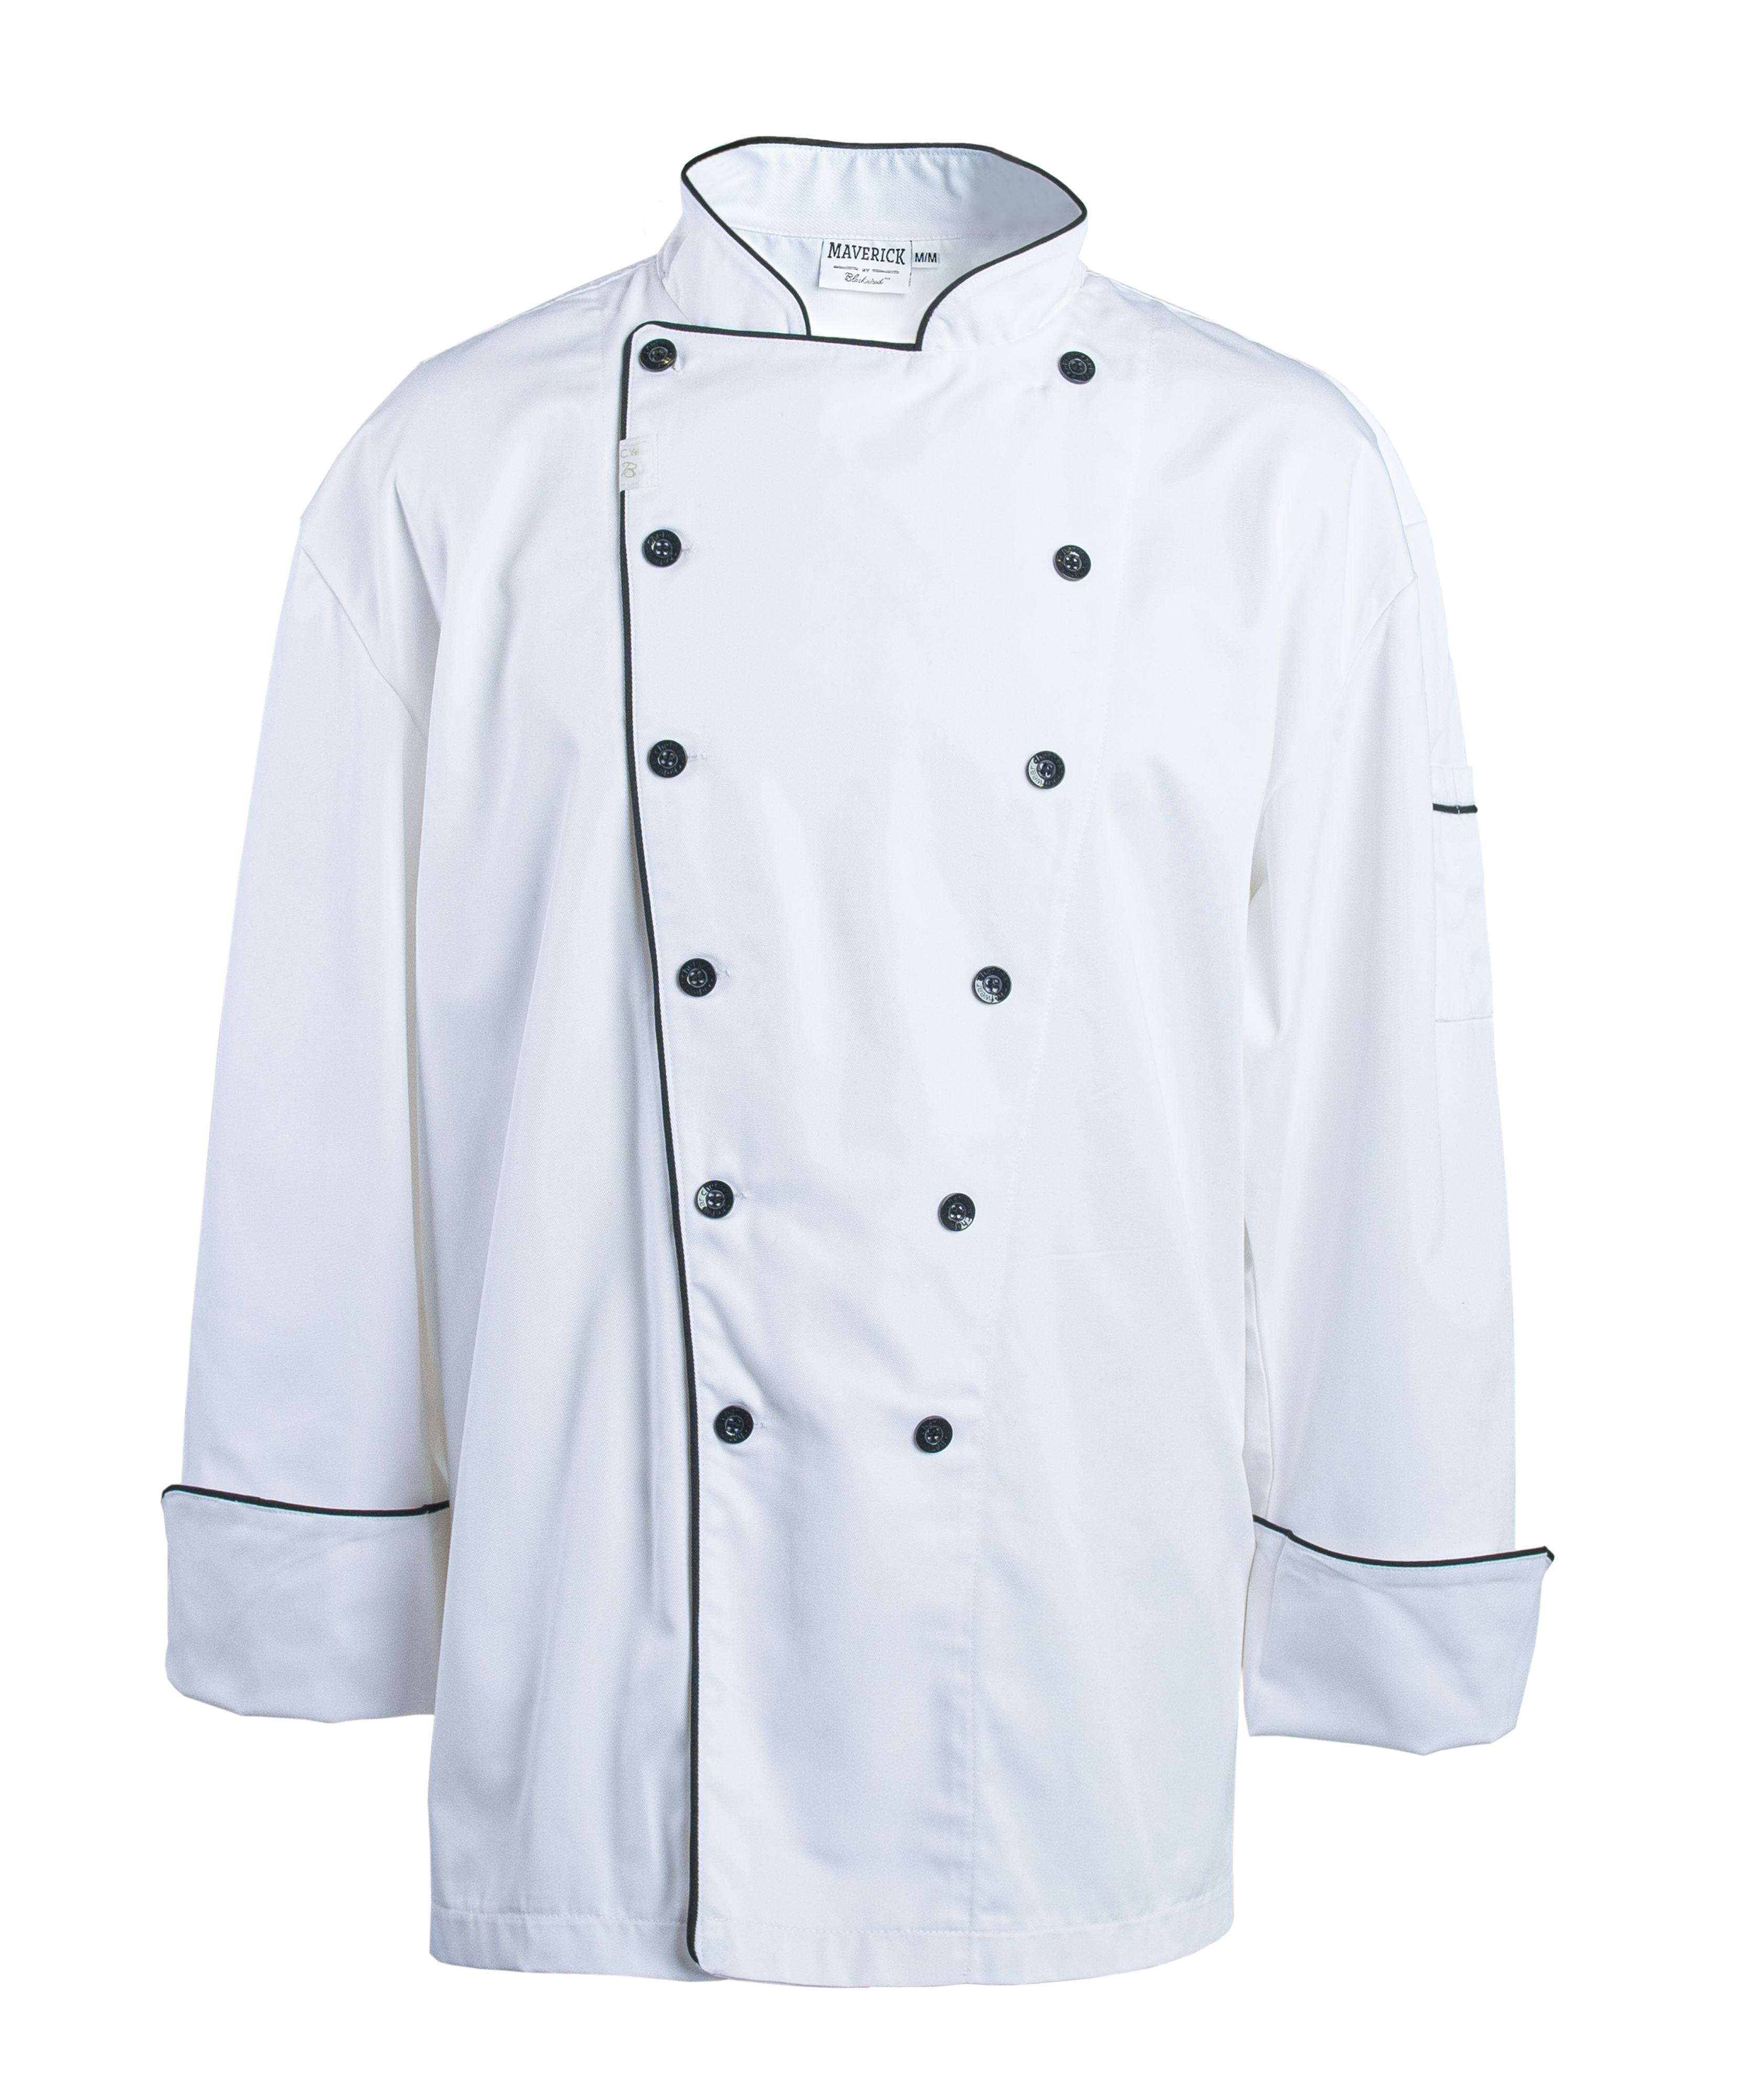 CJ05 European Style Chef Jacket w/ Black Piping